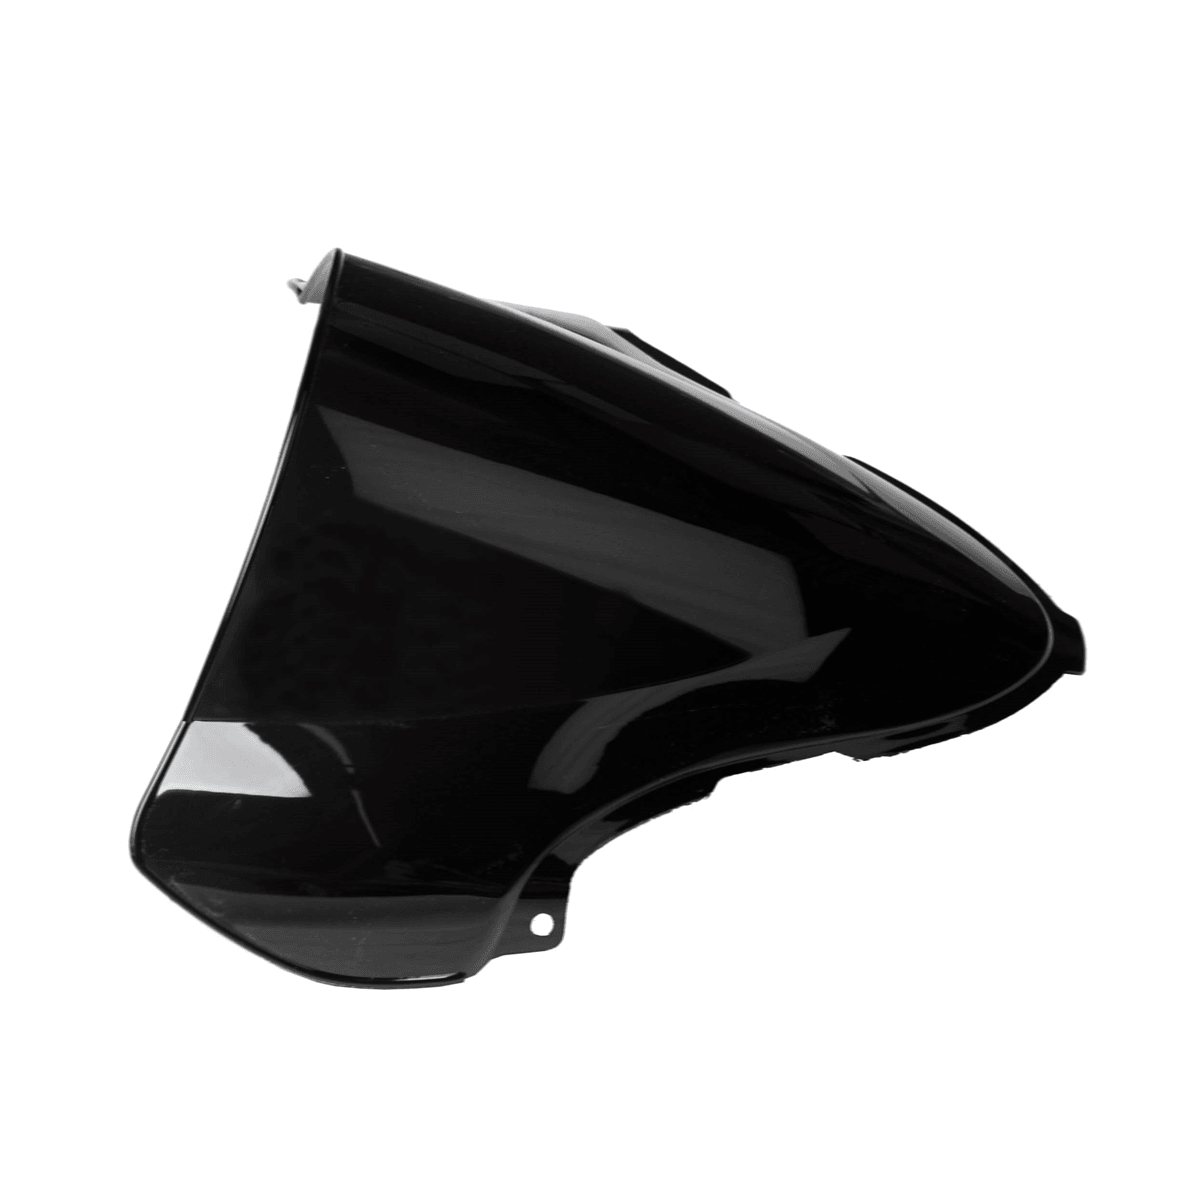 Black Windscreen Windshield Fit For SUZUKI GSX1300R Hayabusa 1999-2007 06 05 04 - Moto Life Products